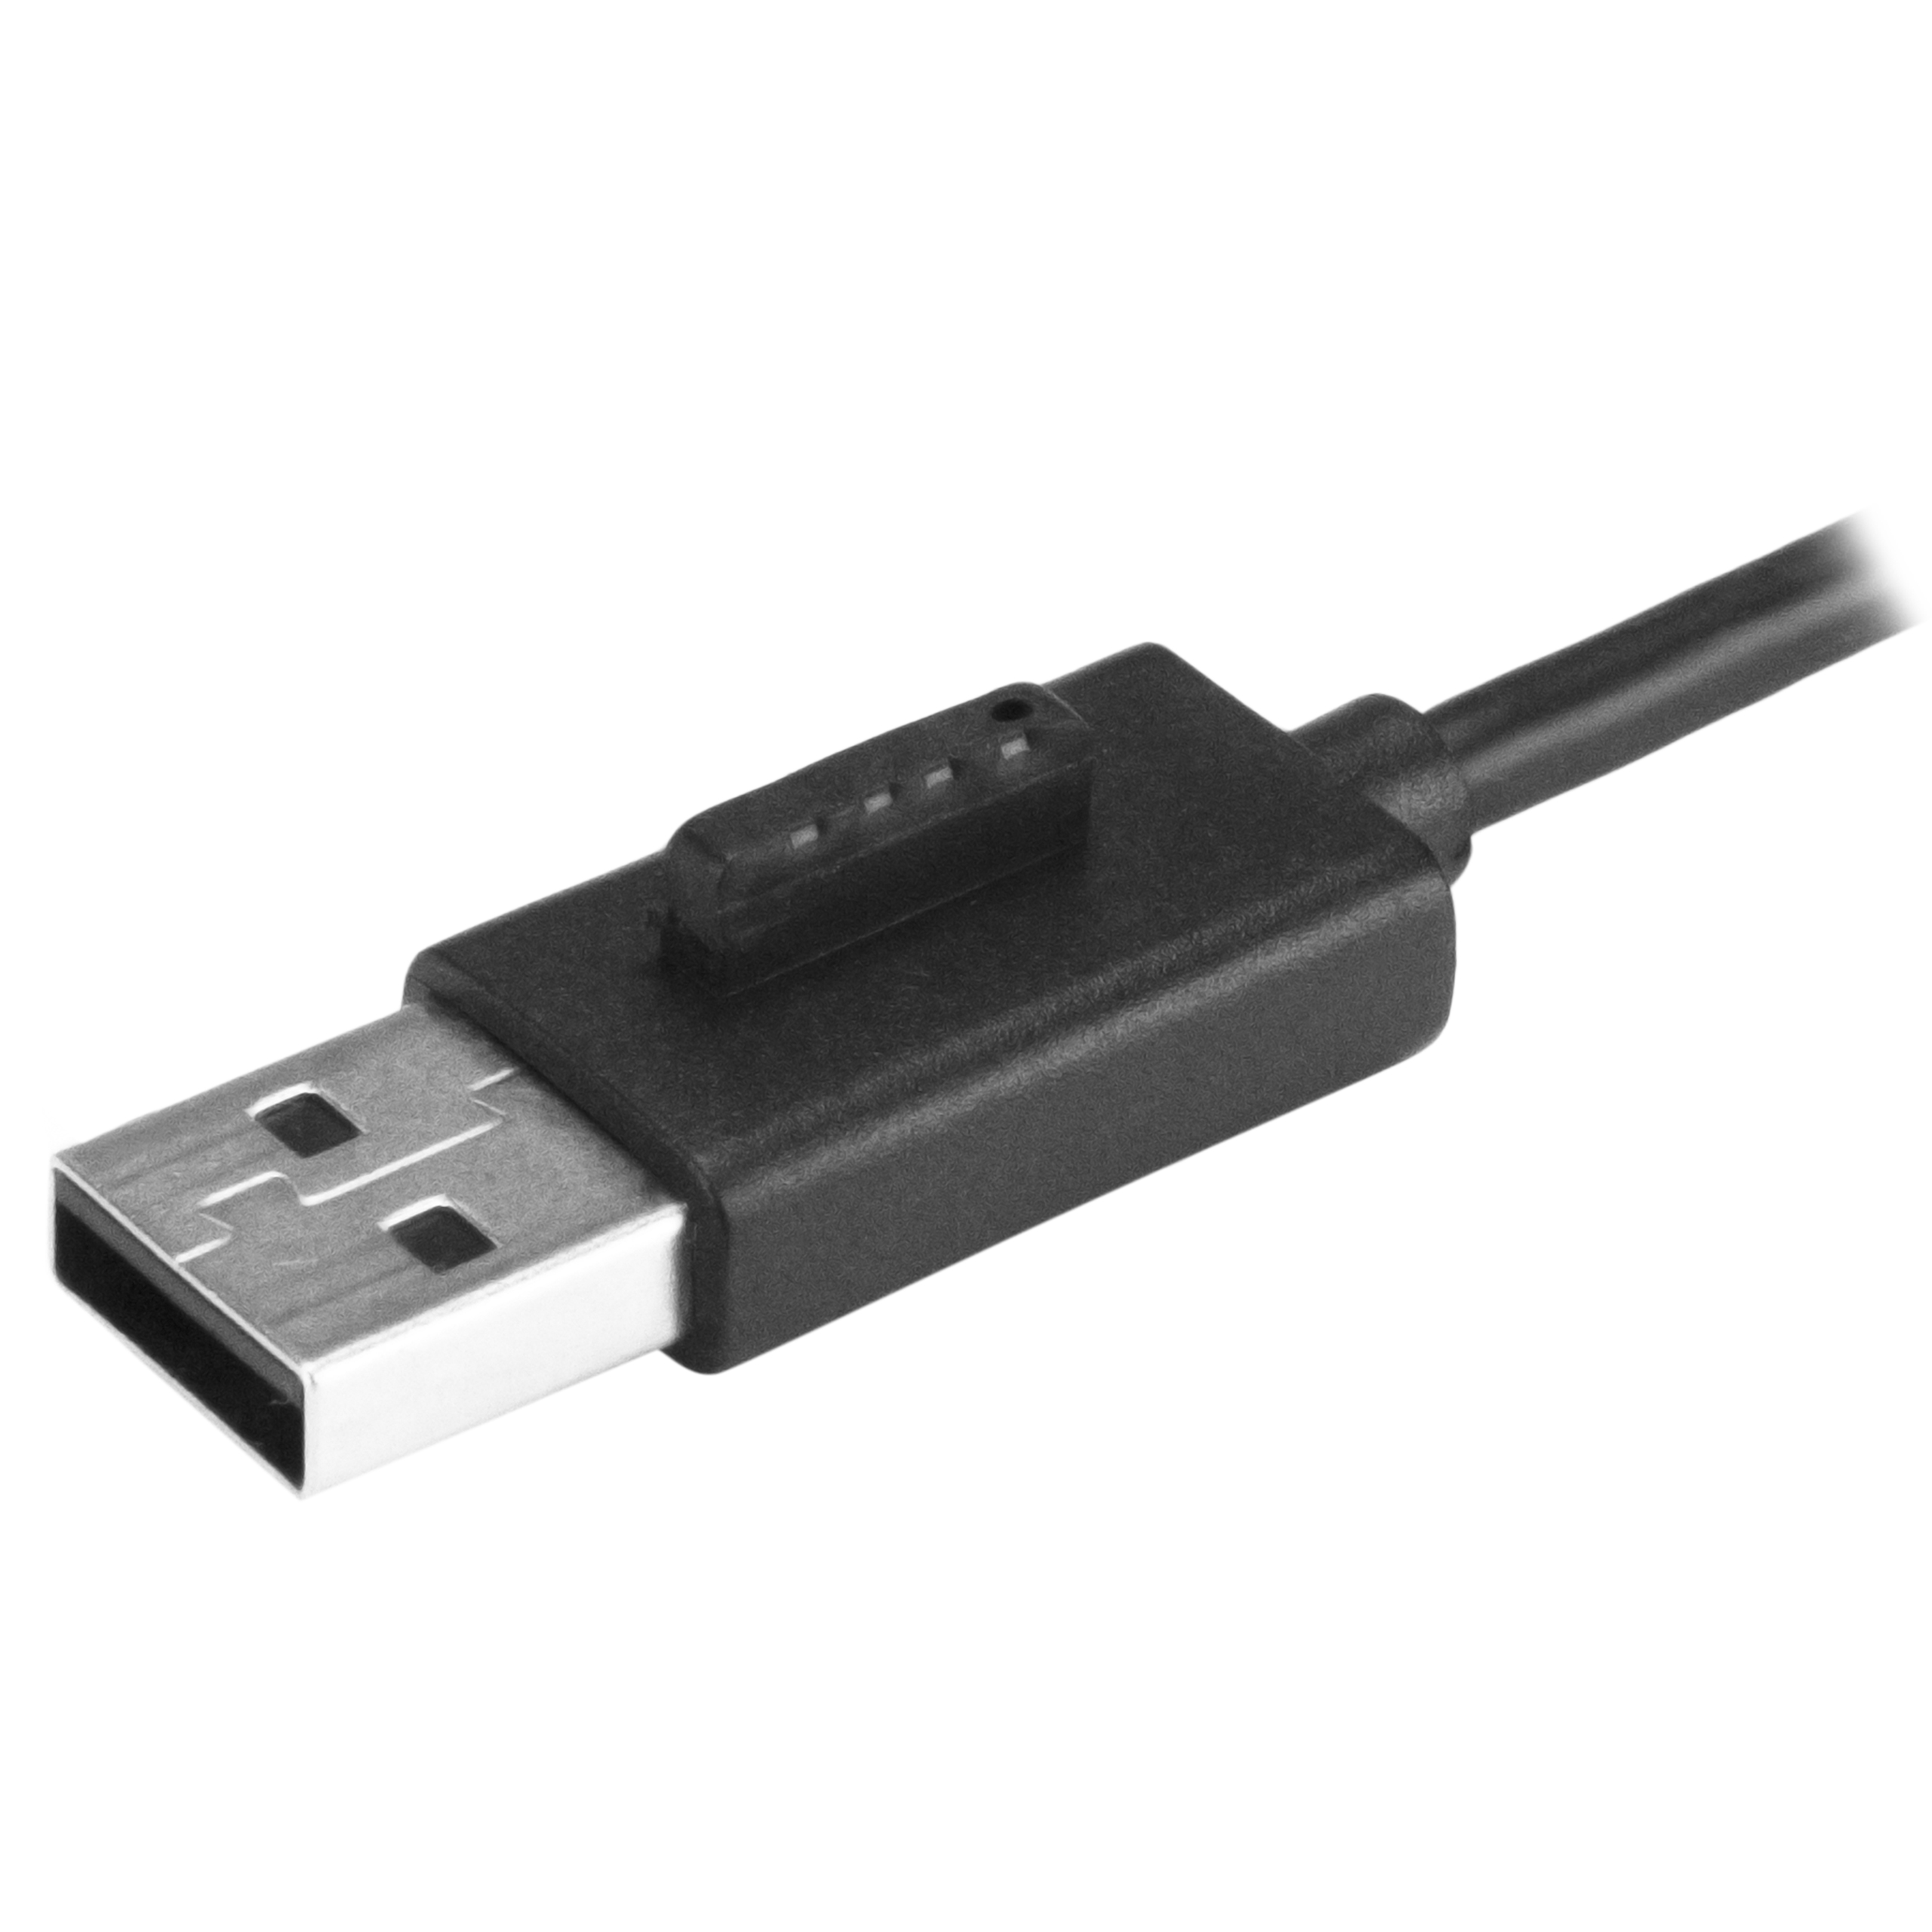 StarTech.com 4 Port USB 2.0 Hub - USB Bus Powered - Portable Multi Port USB 2.0 Splitter and Expander Hub - Small Travel USB Hub - image 5 of 6